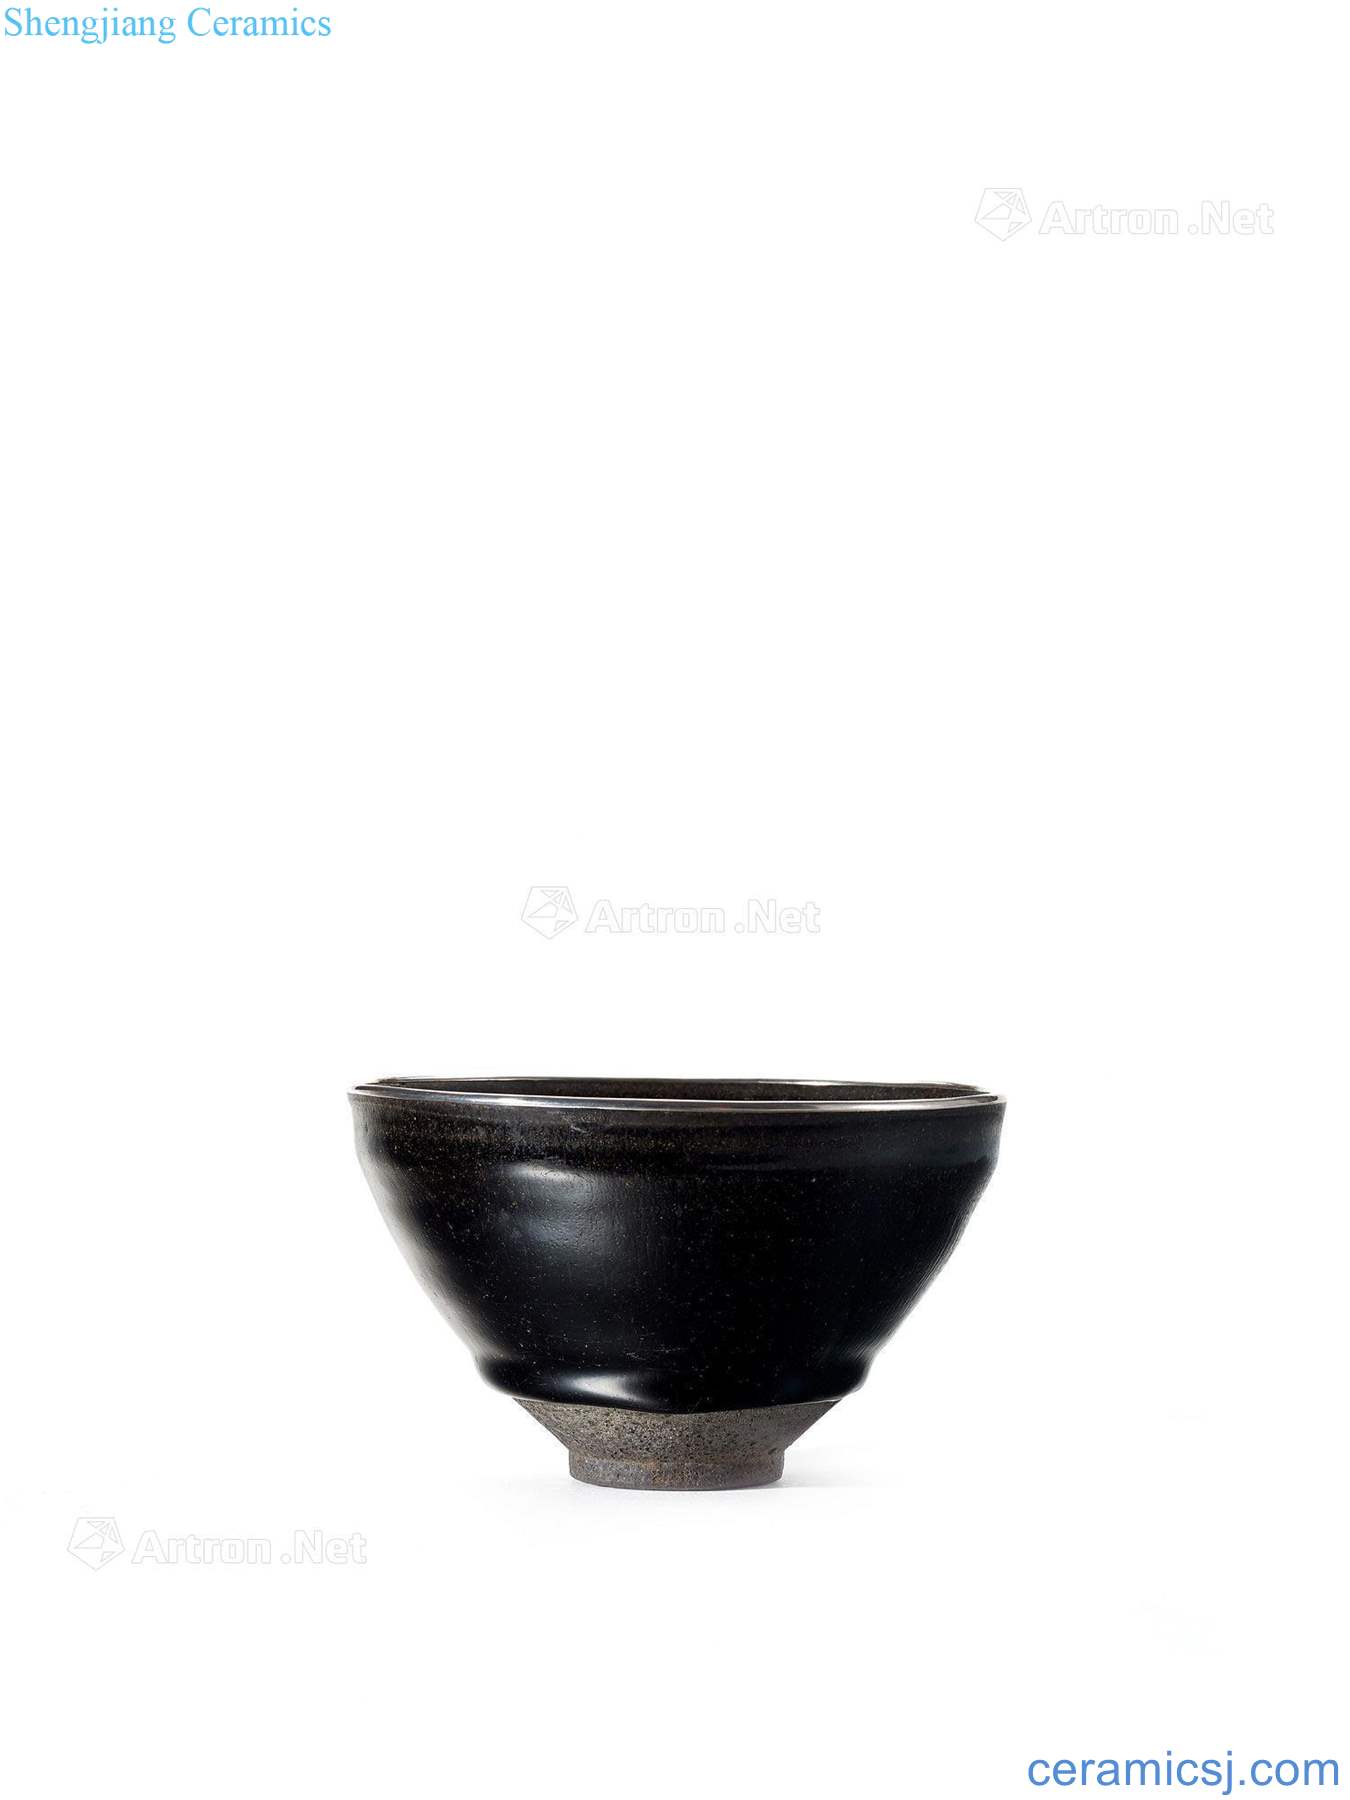 The southern song dynasty To build kilns photo ping Silver TuHao temmoku tea